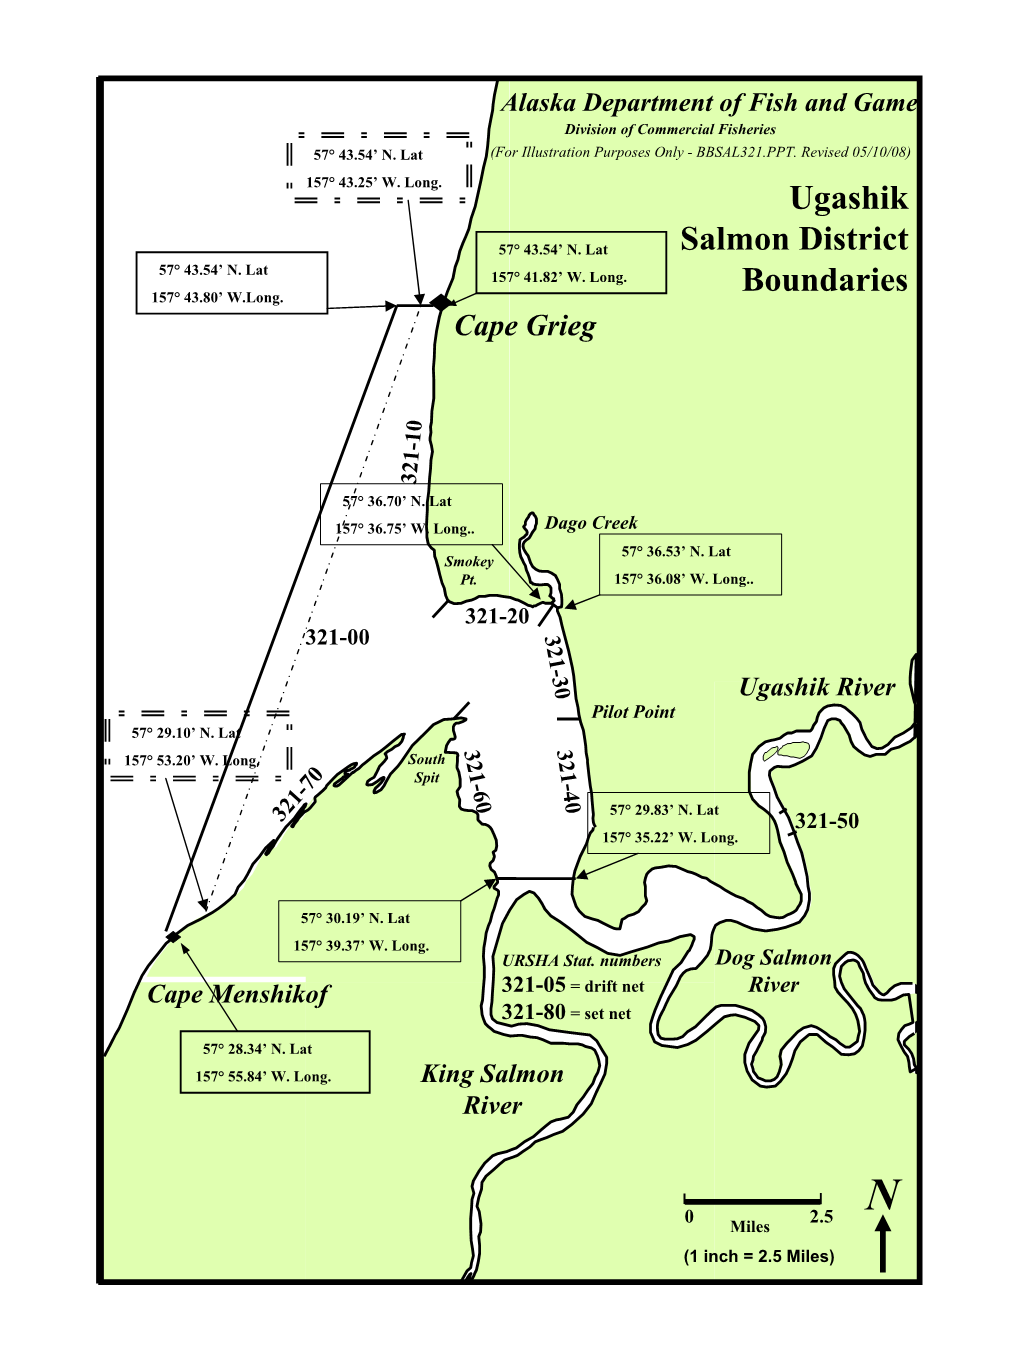 Maps of Bristol Bay Salmon Districts